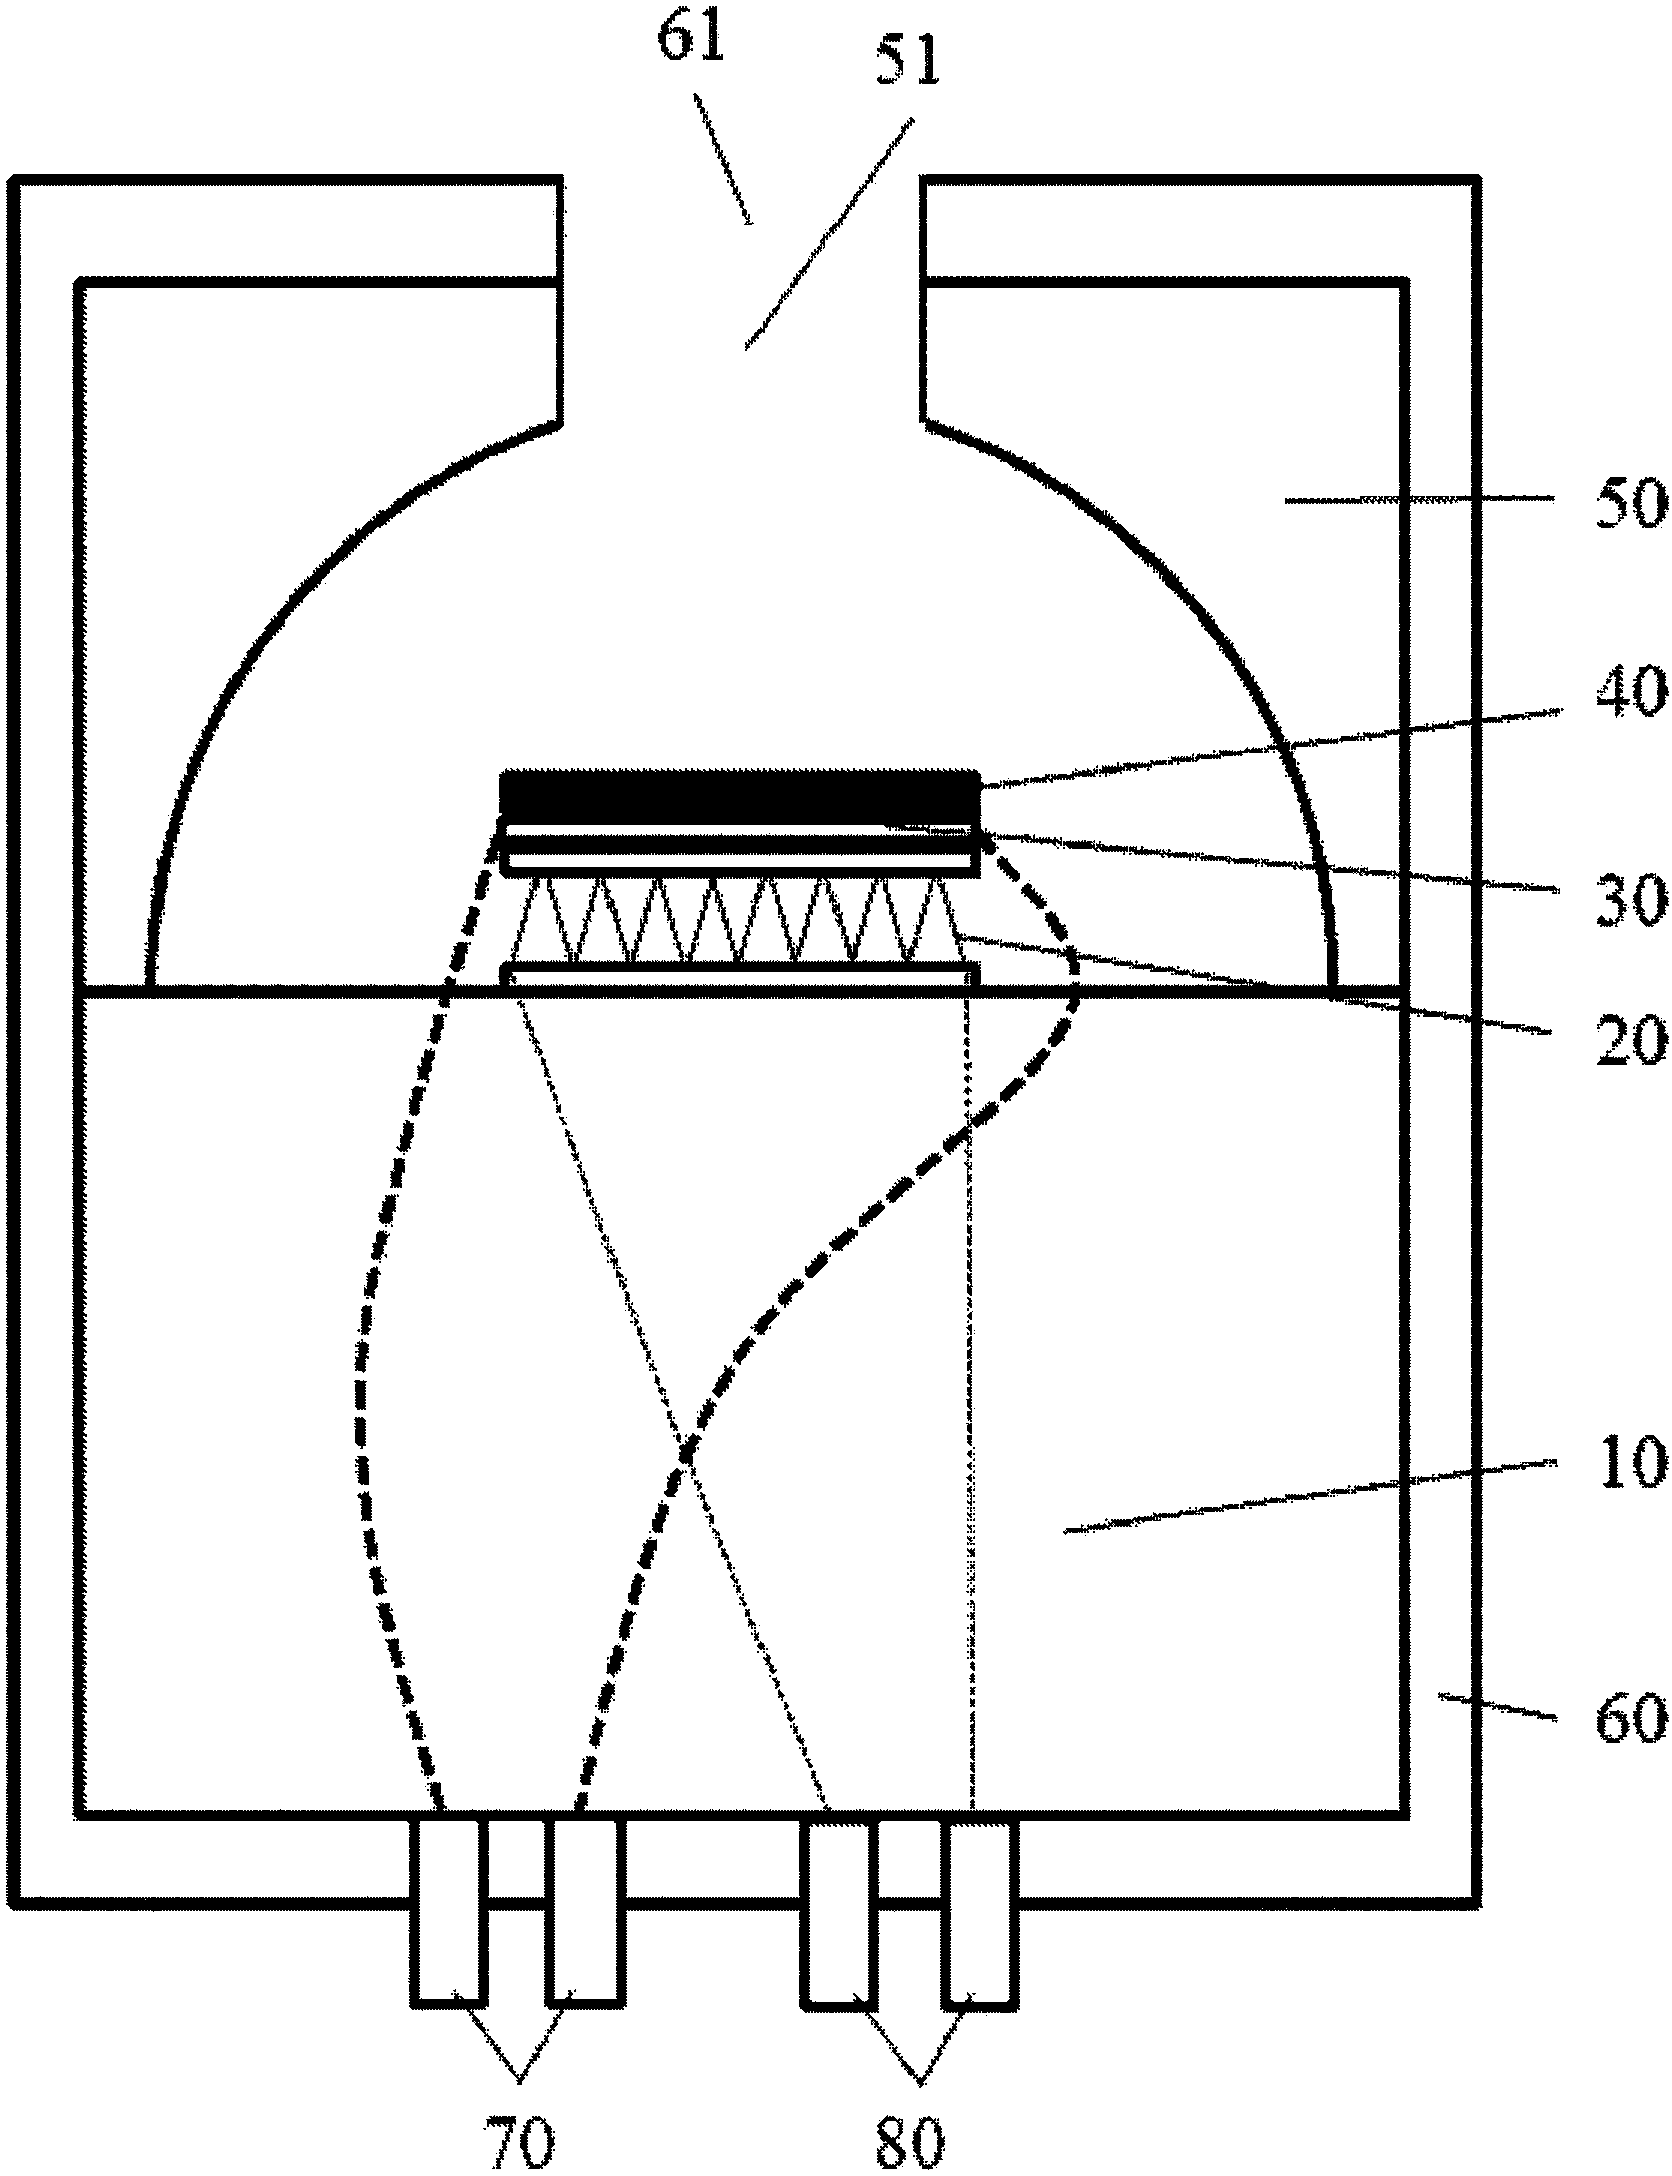 Absolute type terahertz radiometer